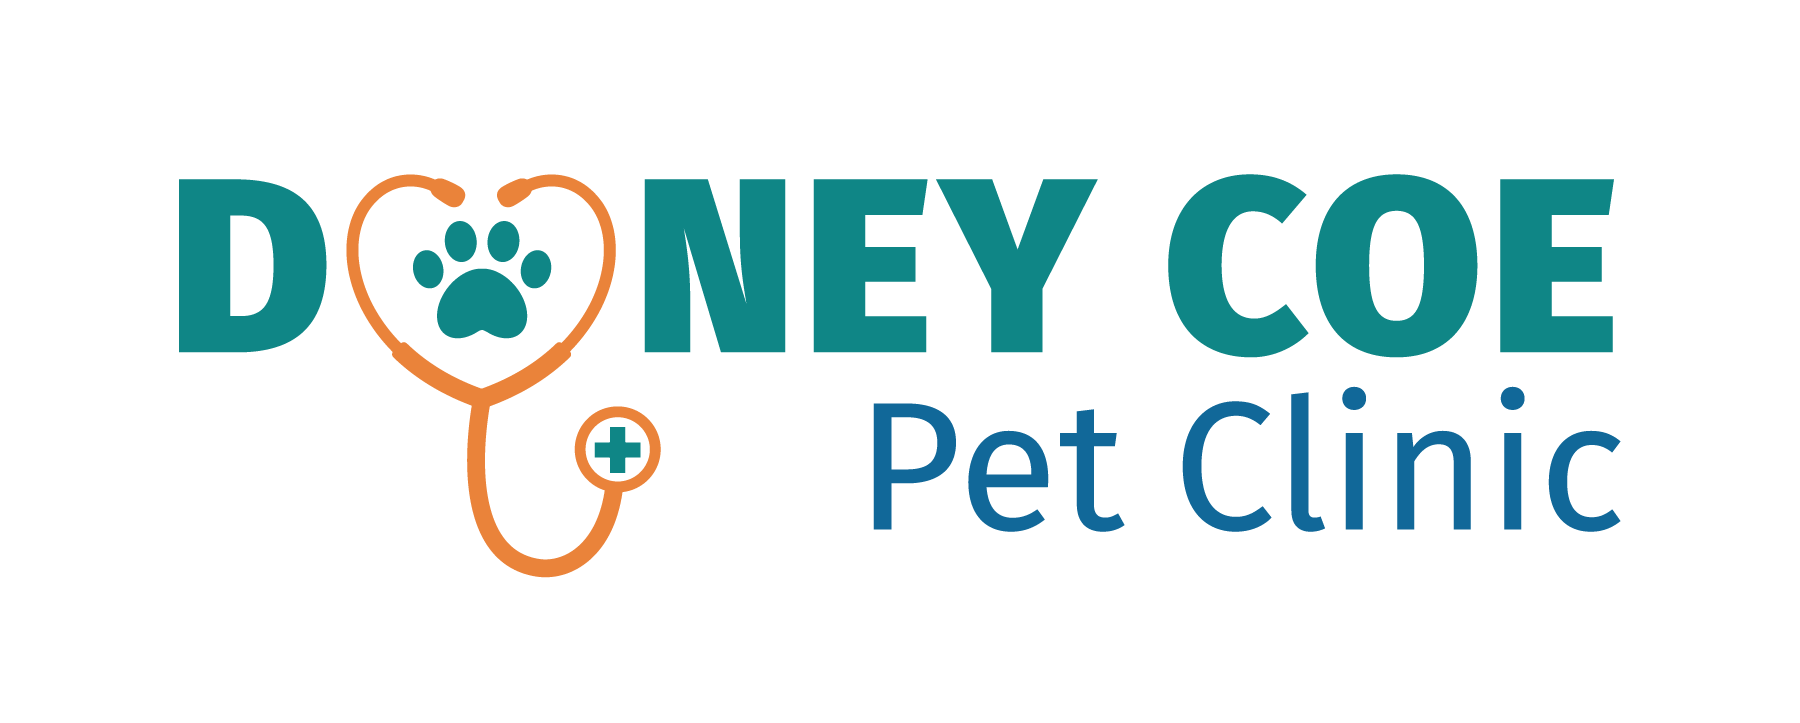 Doney Coe Pet Clinic Logo